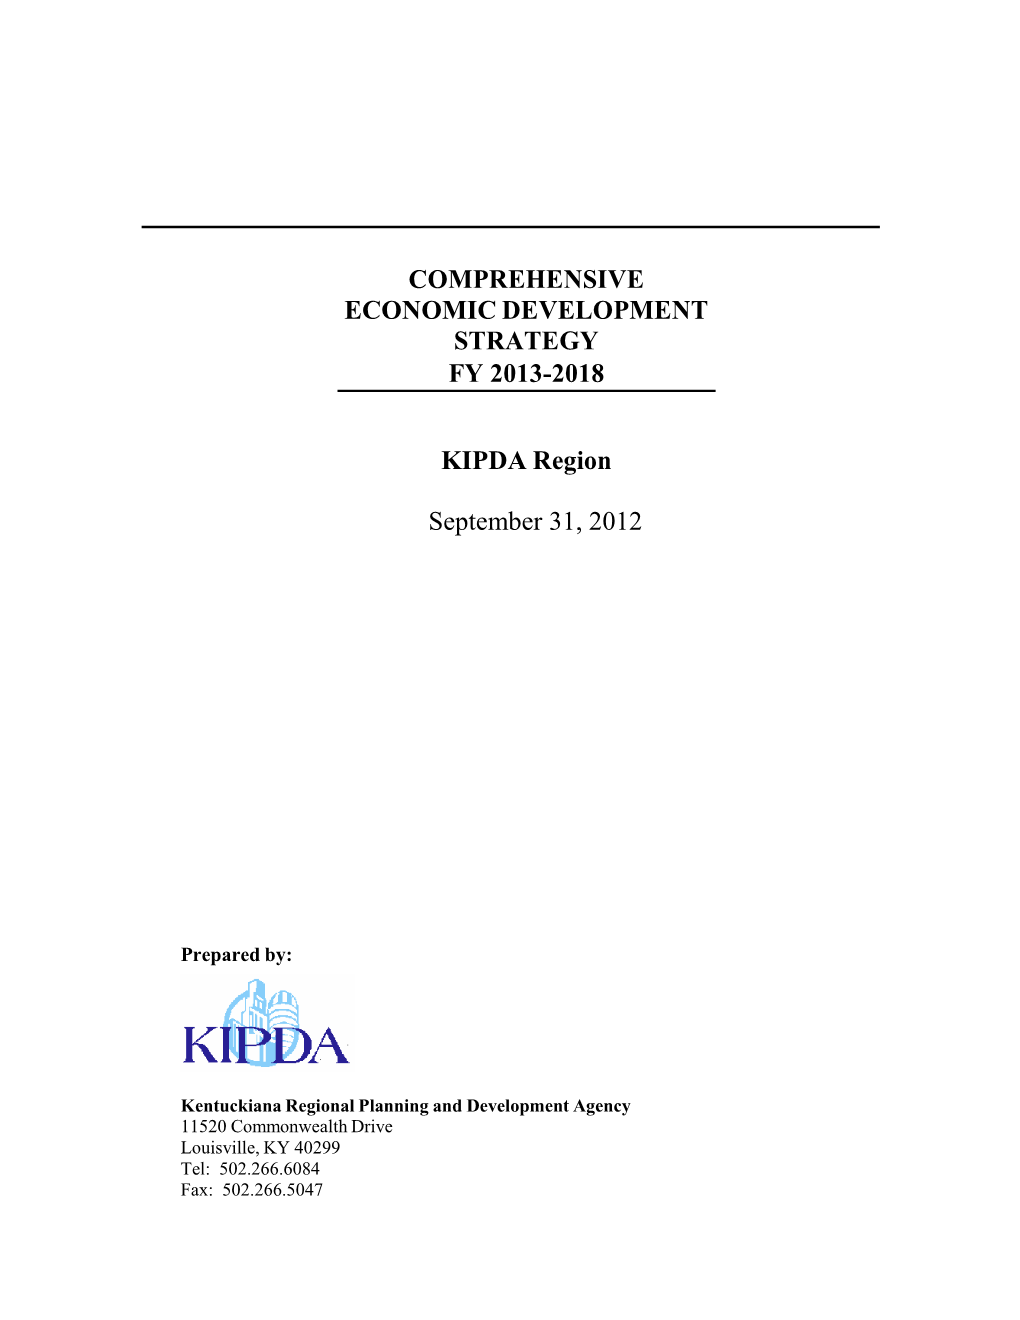 COMPREHENSIVE ECONOMIC DEVELOPMENT STRATEGY FY 2013-2018 KIPDA Region September 31, 2012